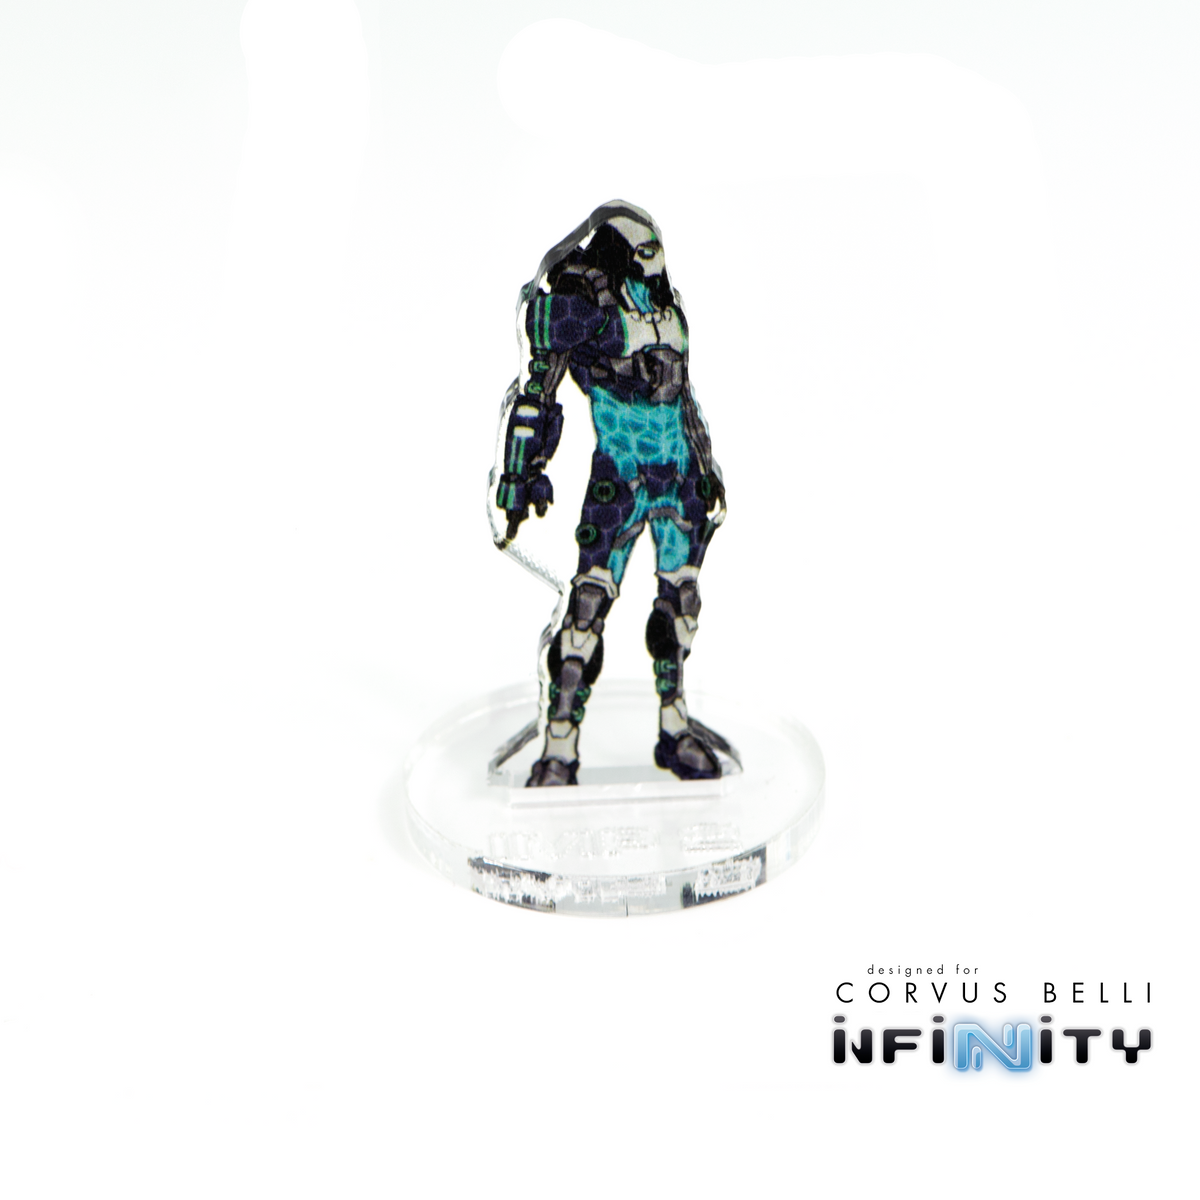 Infinity 3D Markers: Kiiutan Imposter (25mm Impersonation-2)